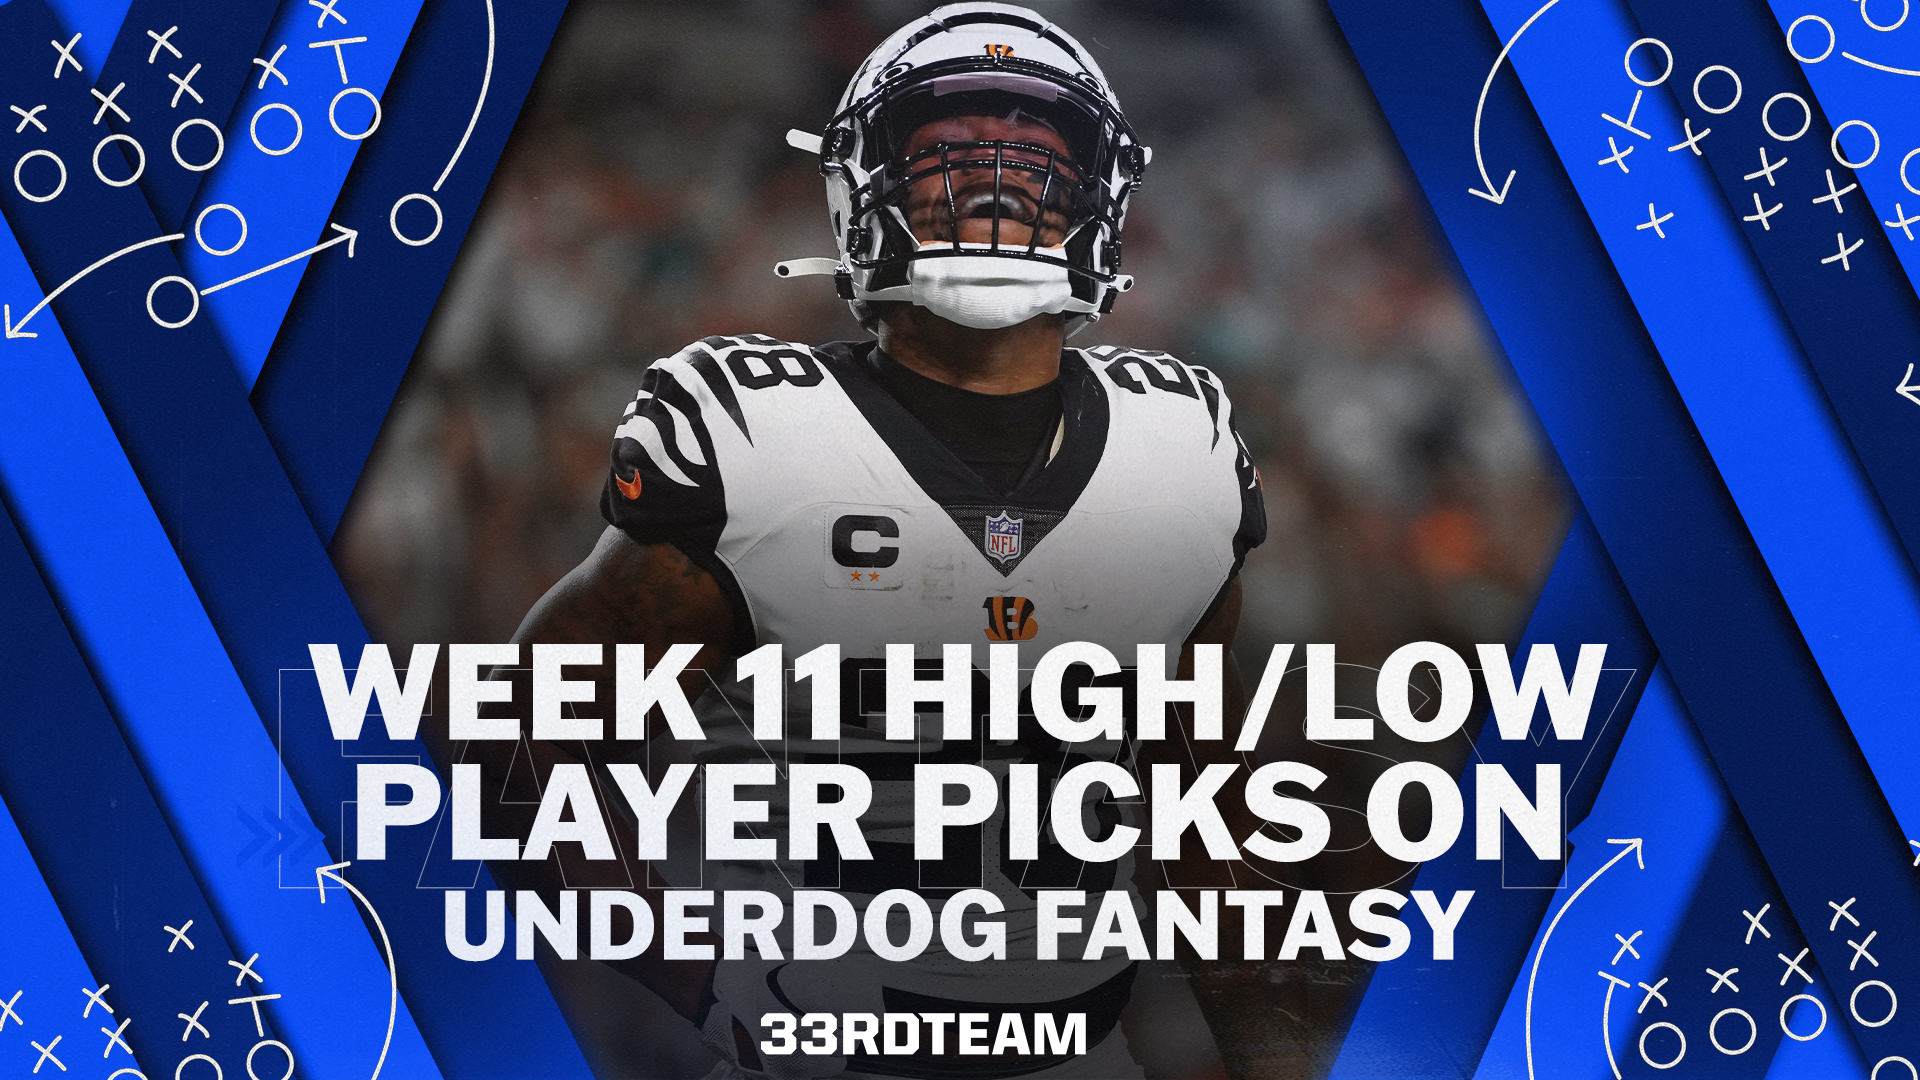 Week 11 NFL Main Slate Underdog High/Low Player Picks